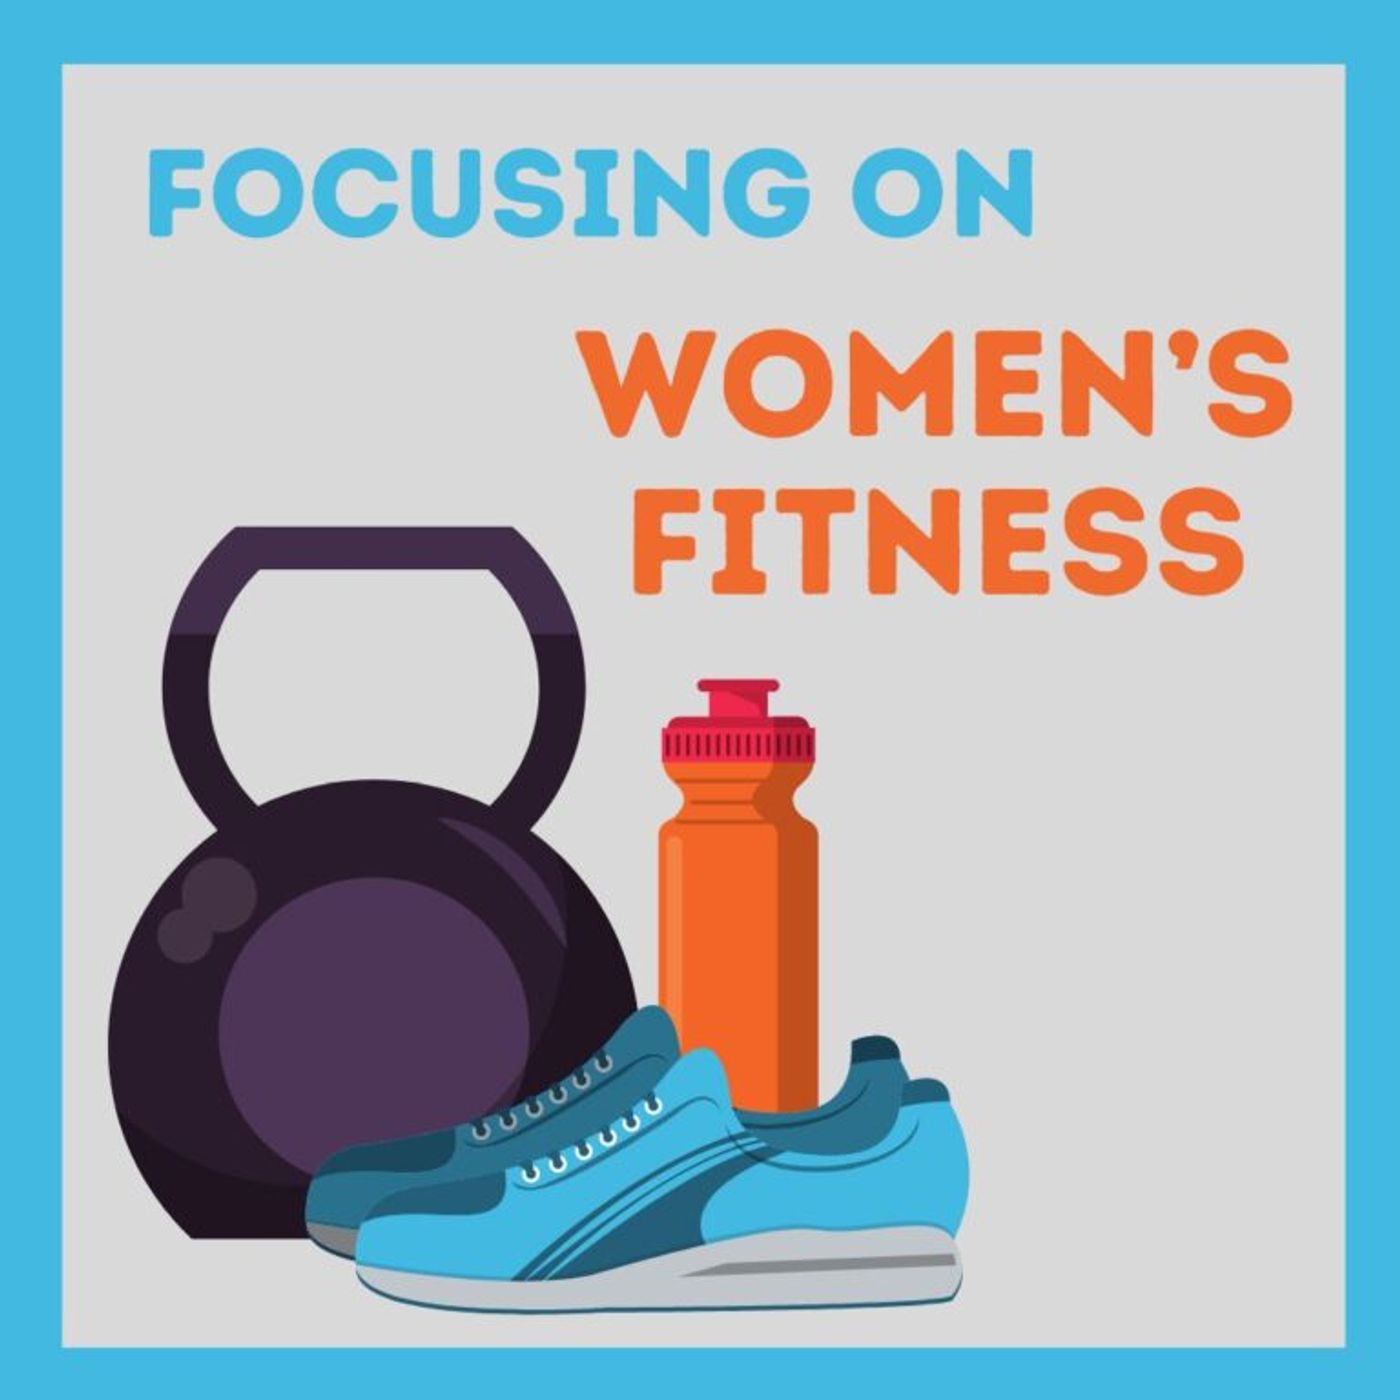 Focusing on Women’s Fitness